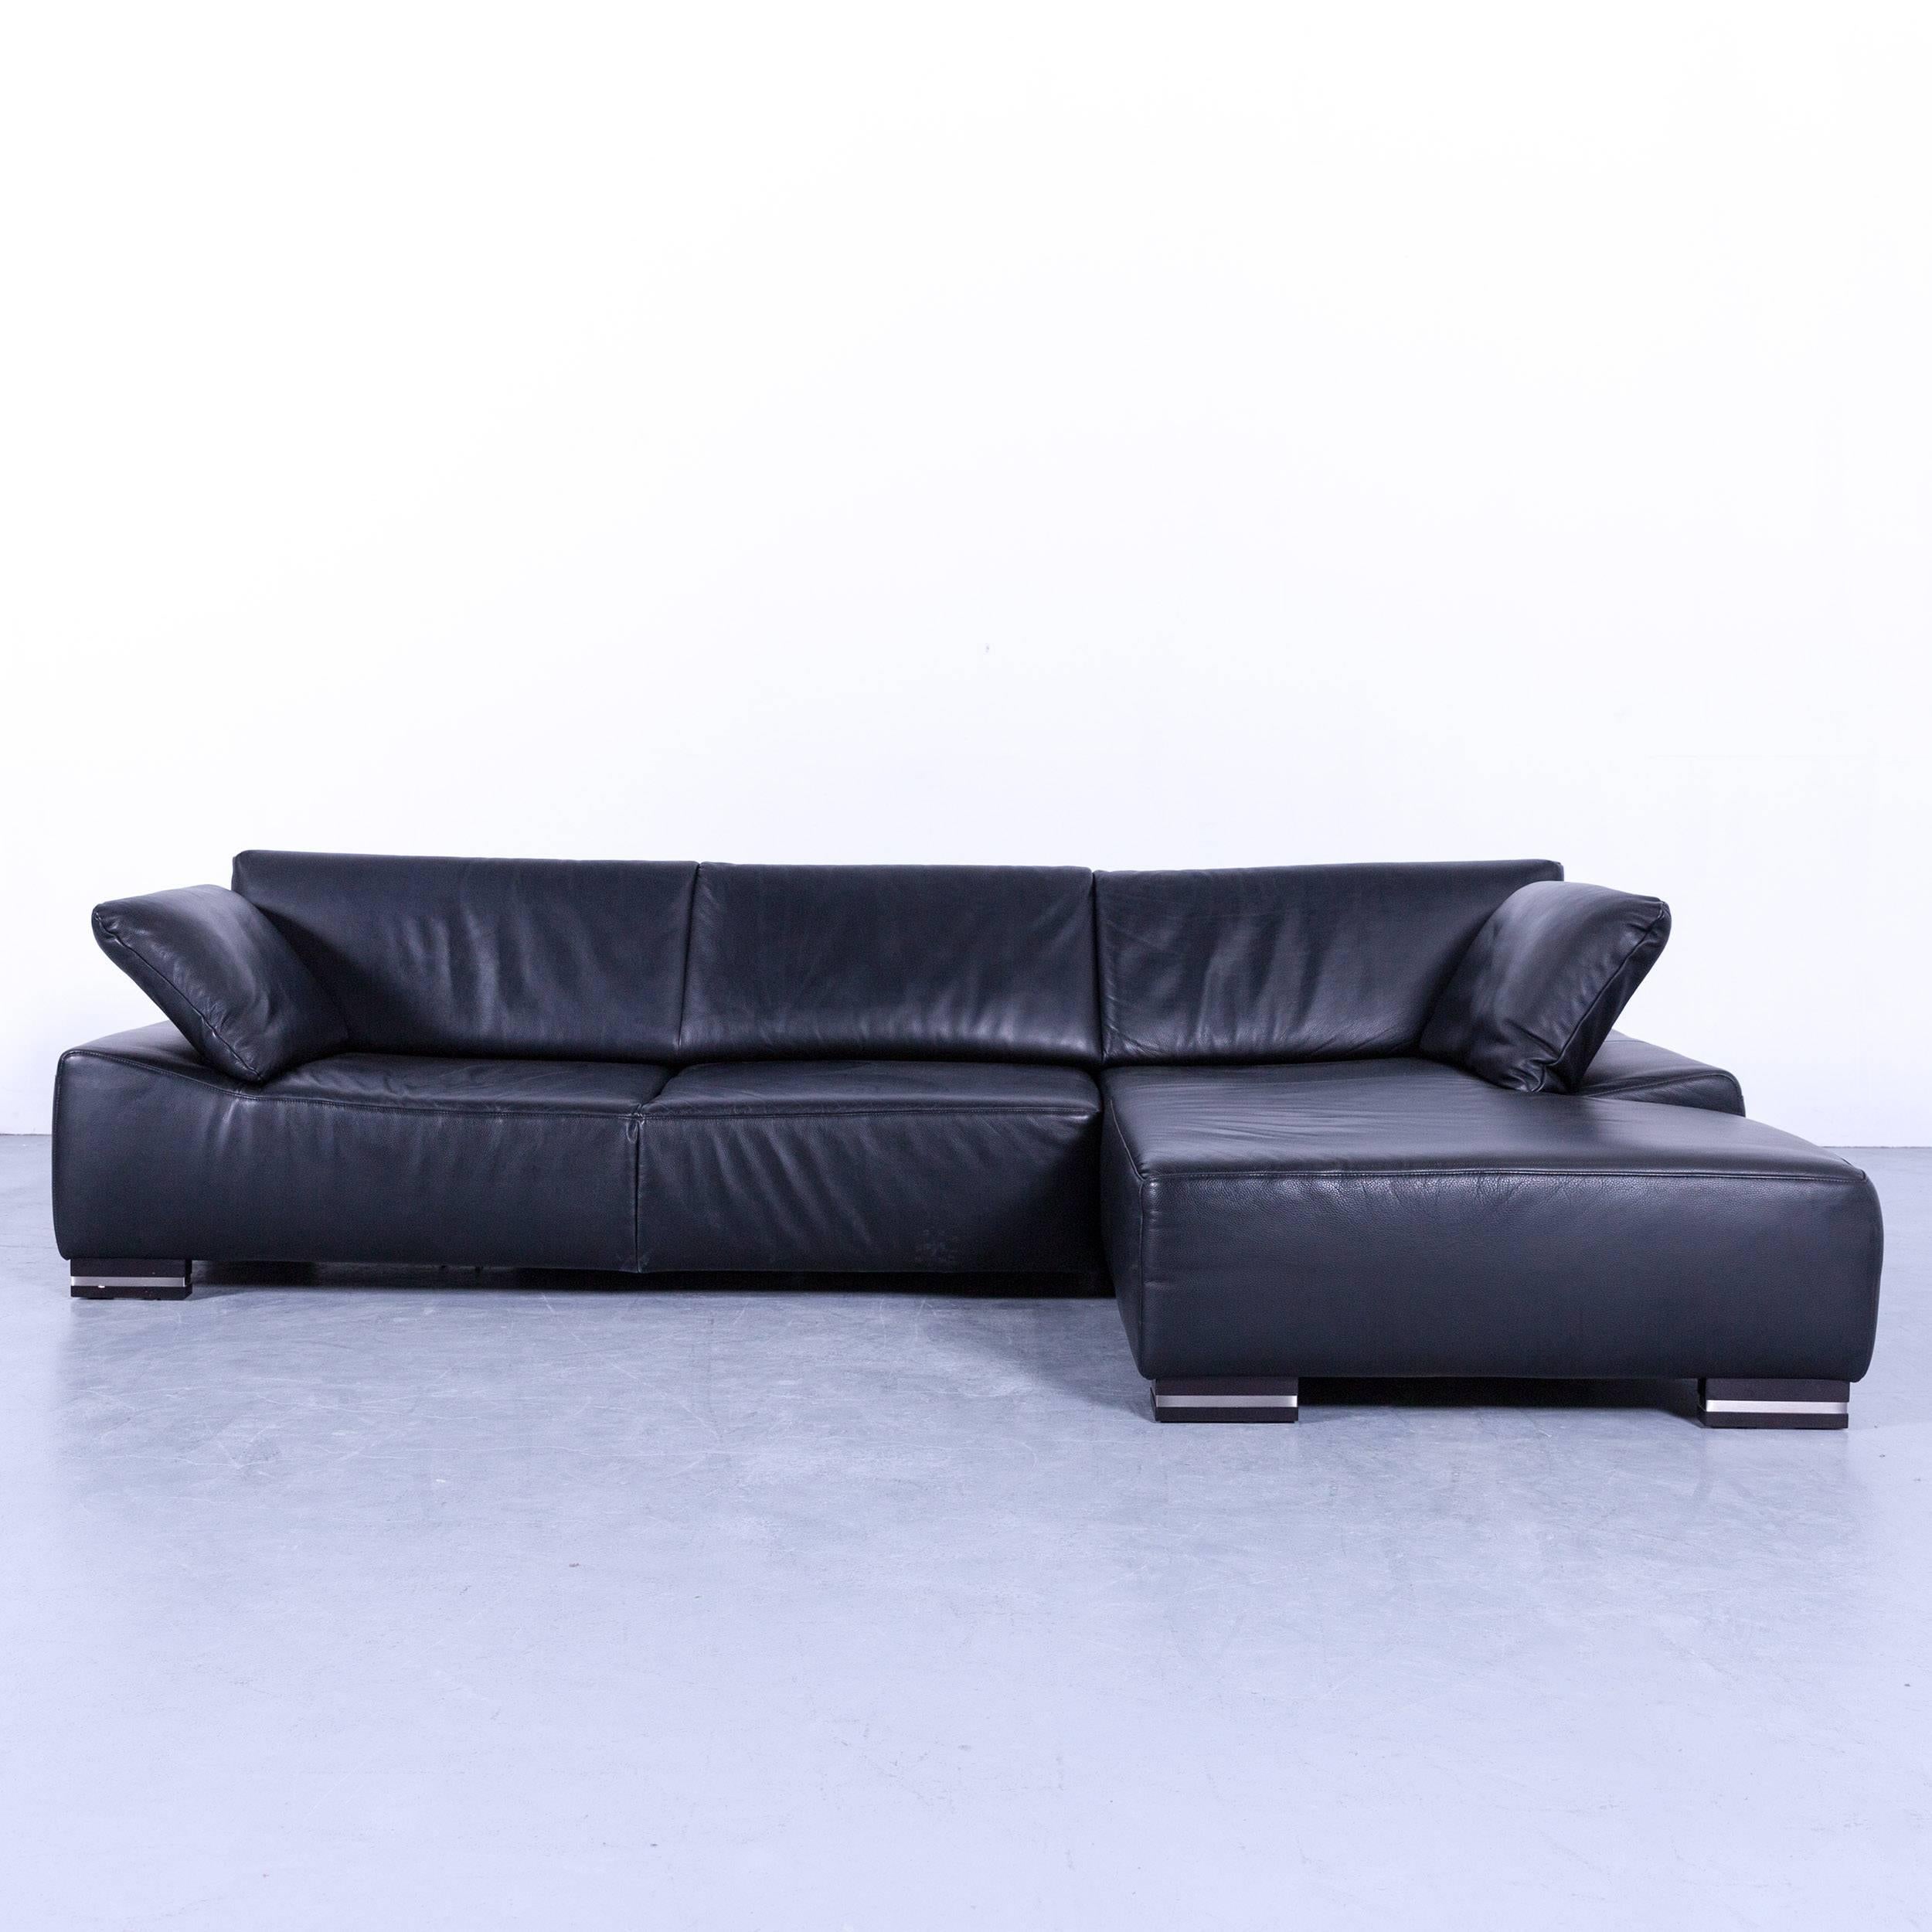 German Ewald Schillig Bentley Designer Corner Couch Leather Black Funktion Neck Rest